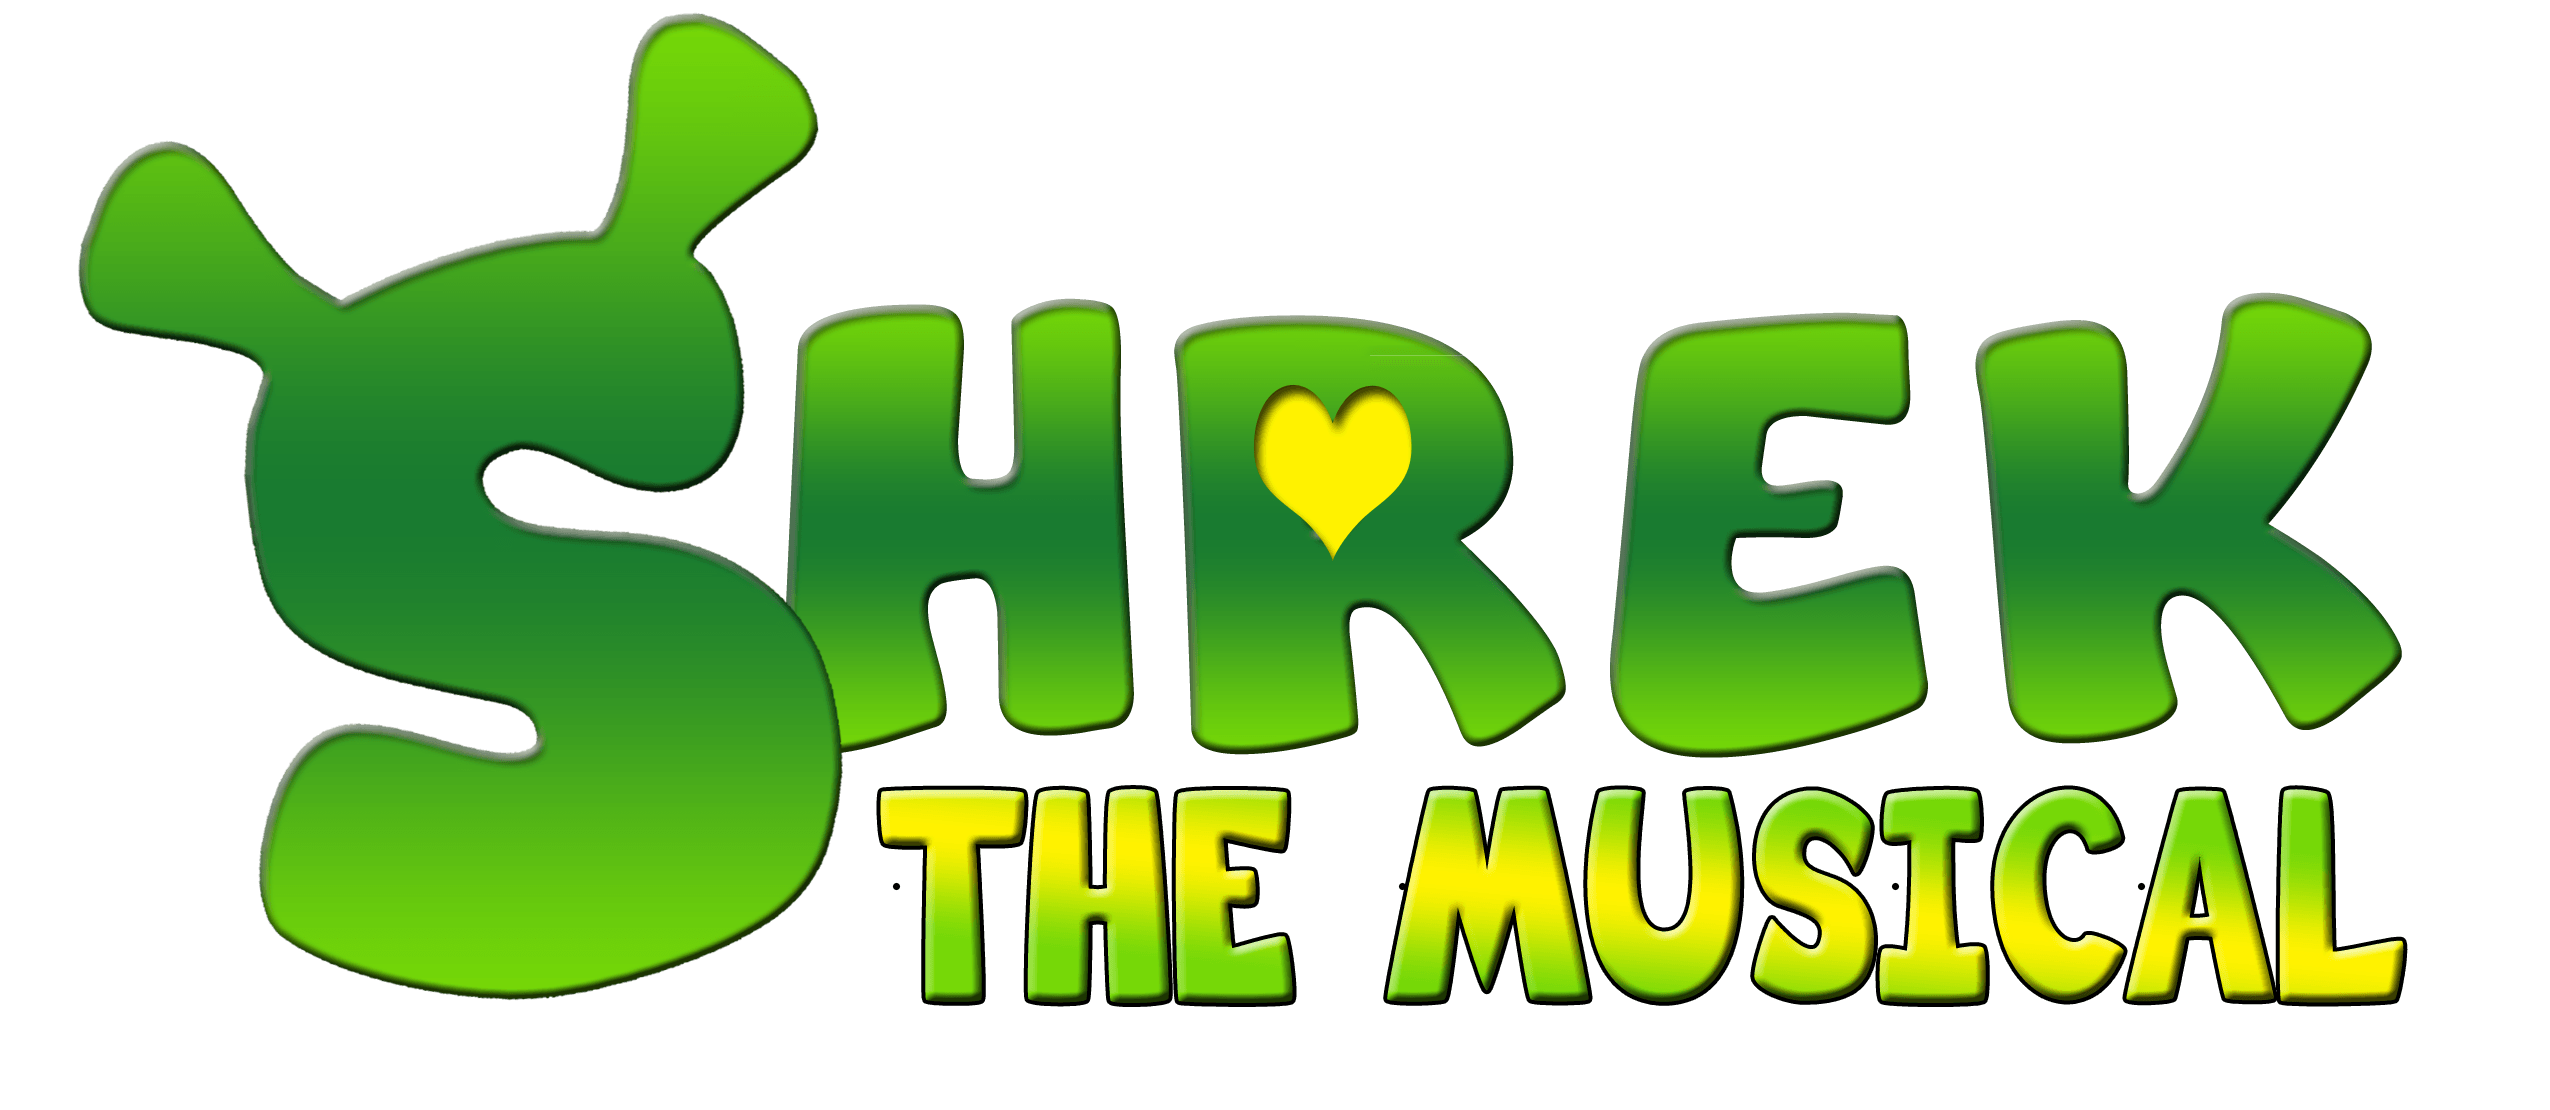 Shrek Logo - Shrek logo. The Community House